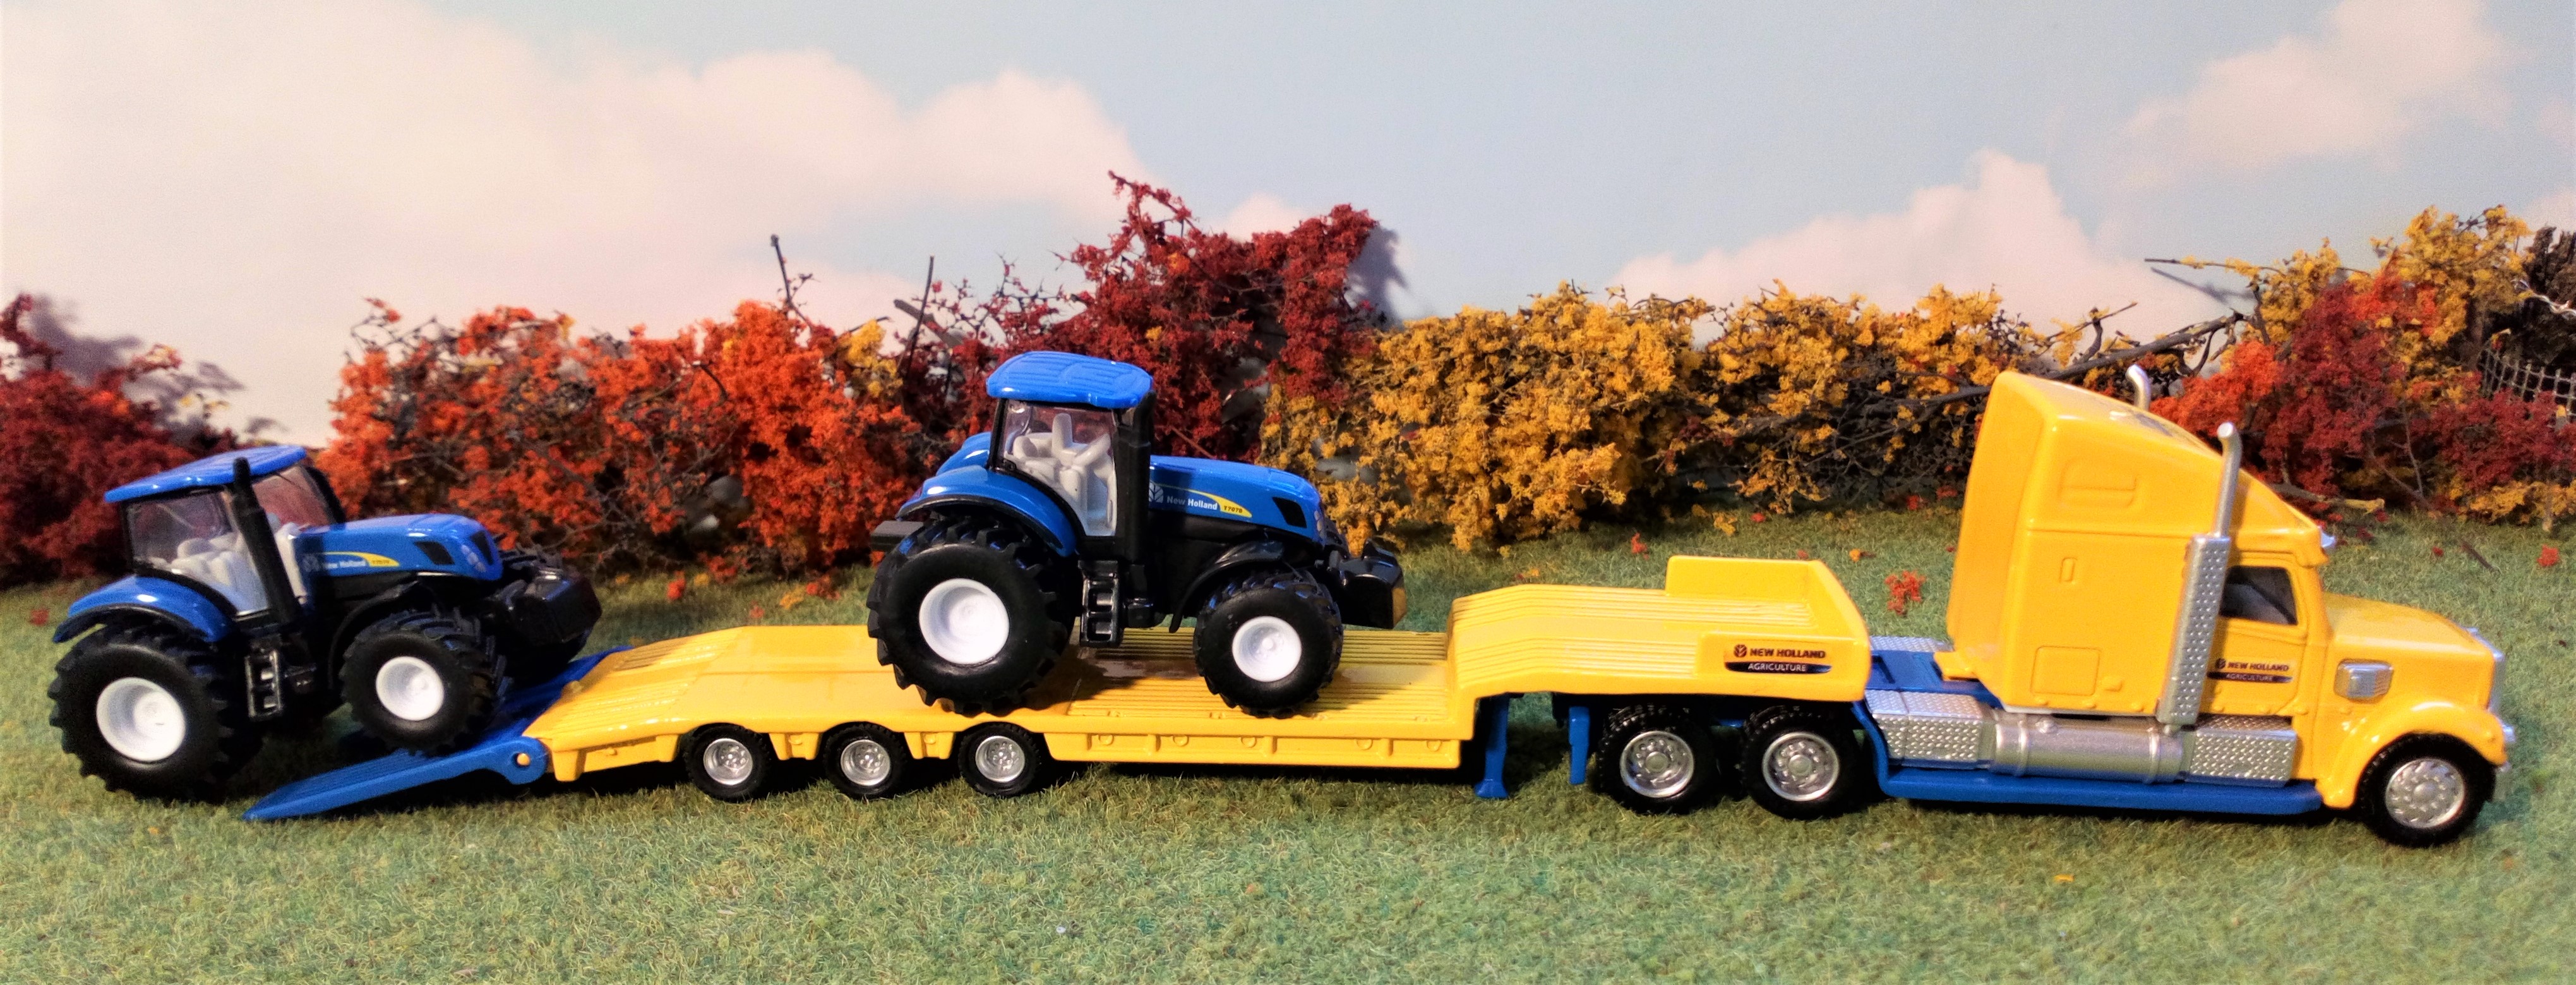 Siku 1/87 Truck With New Holland Tractors - Carpet Farmer